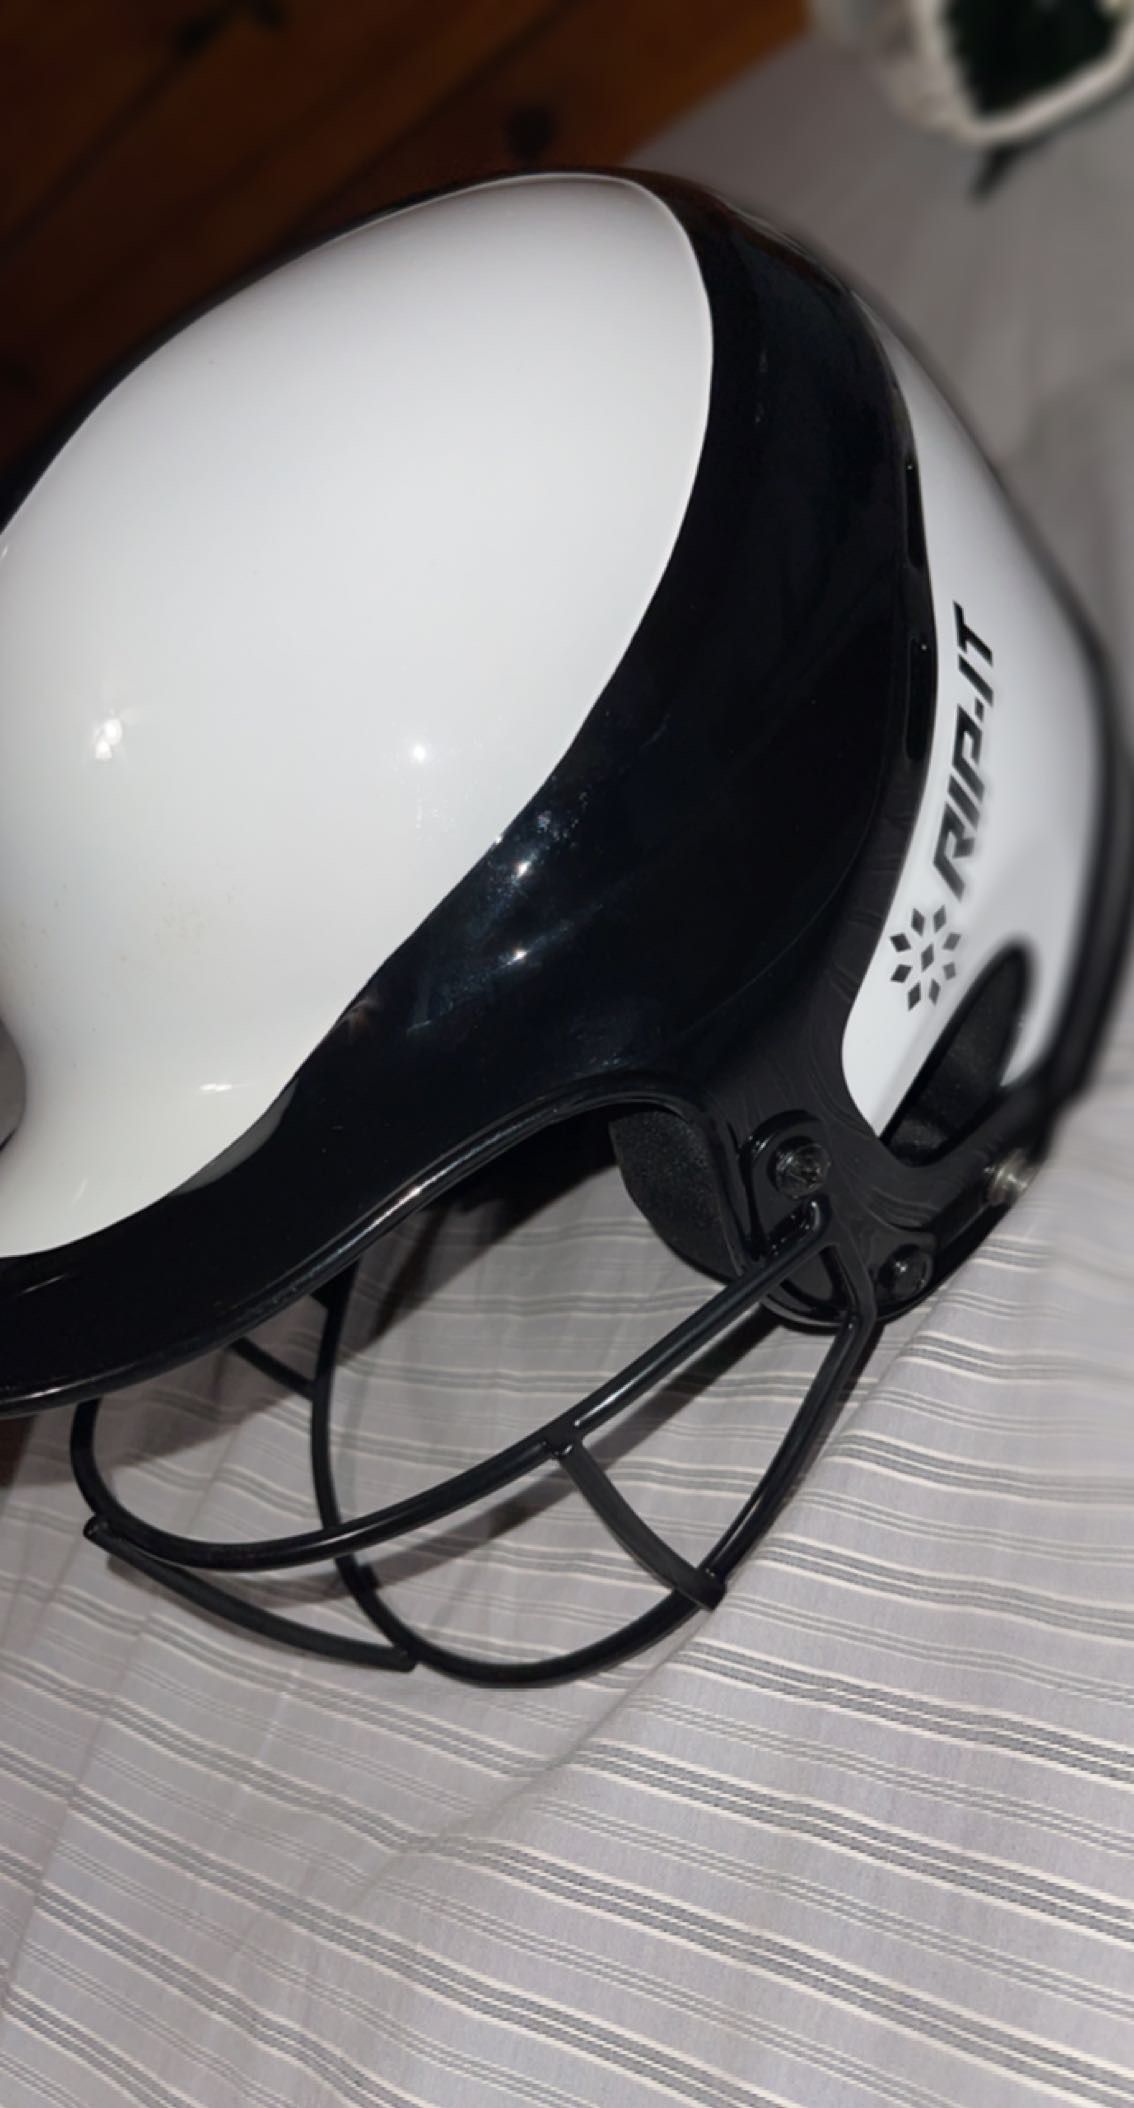 New Rip-it Black And White Adult Batting Helmet 